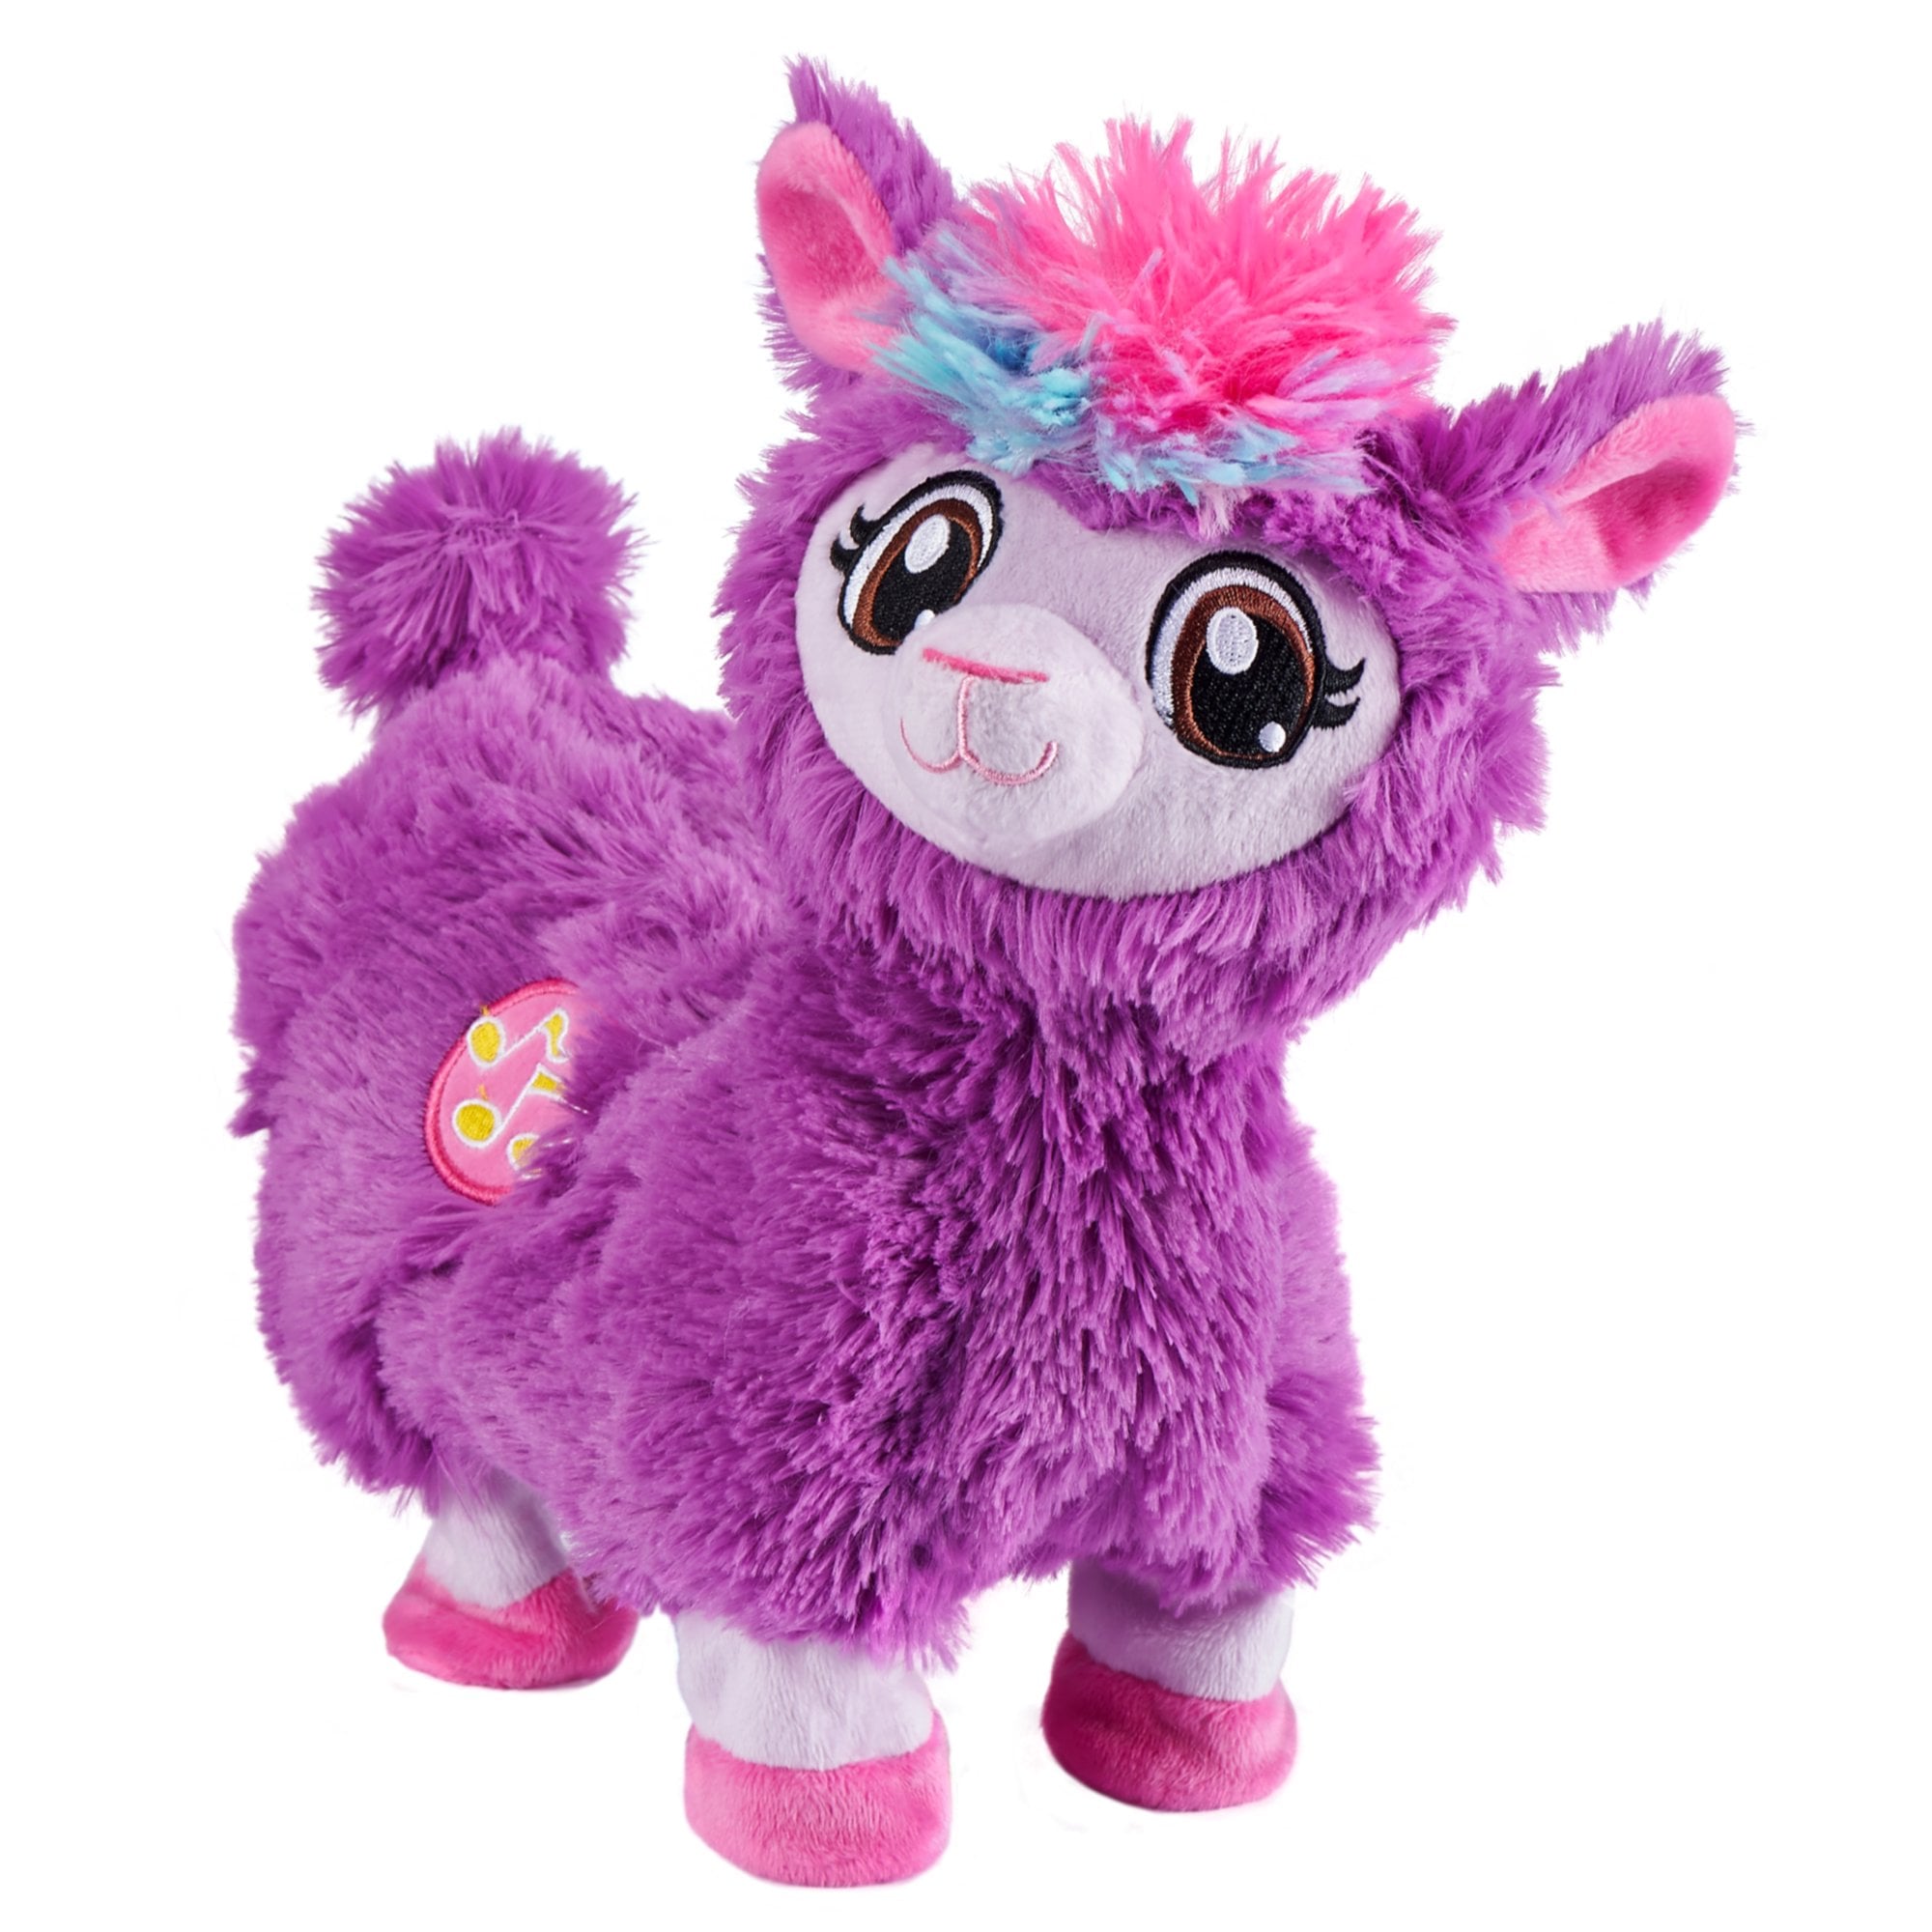 Zuru Pets Alive Boppi the Booty Shakin Llama Fun Toy For Kids New In Box. 